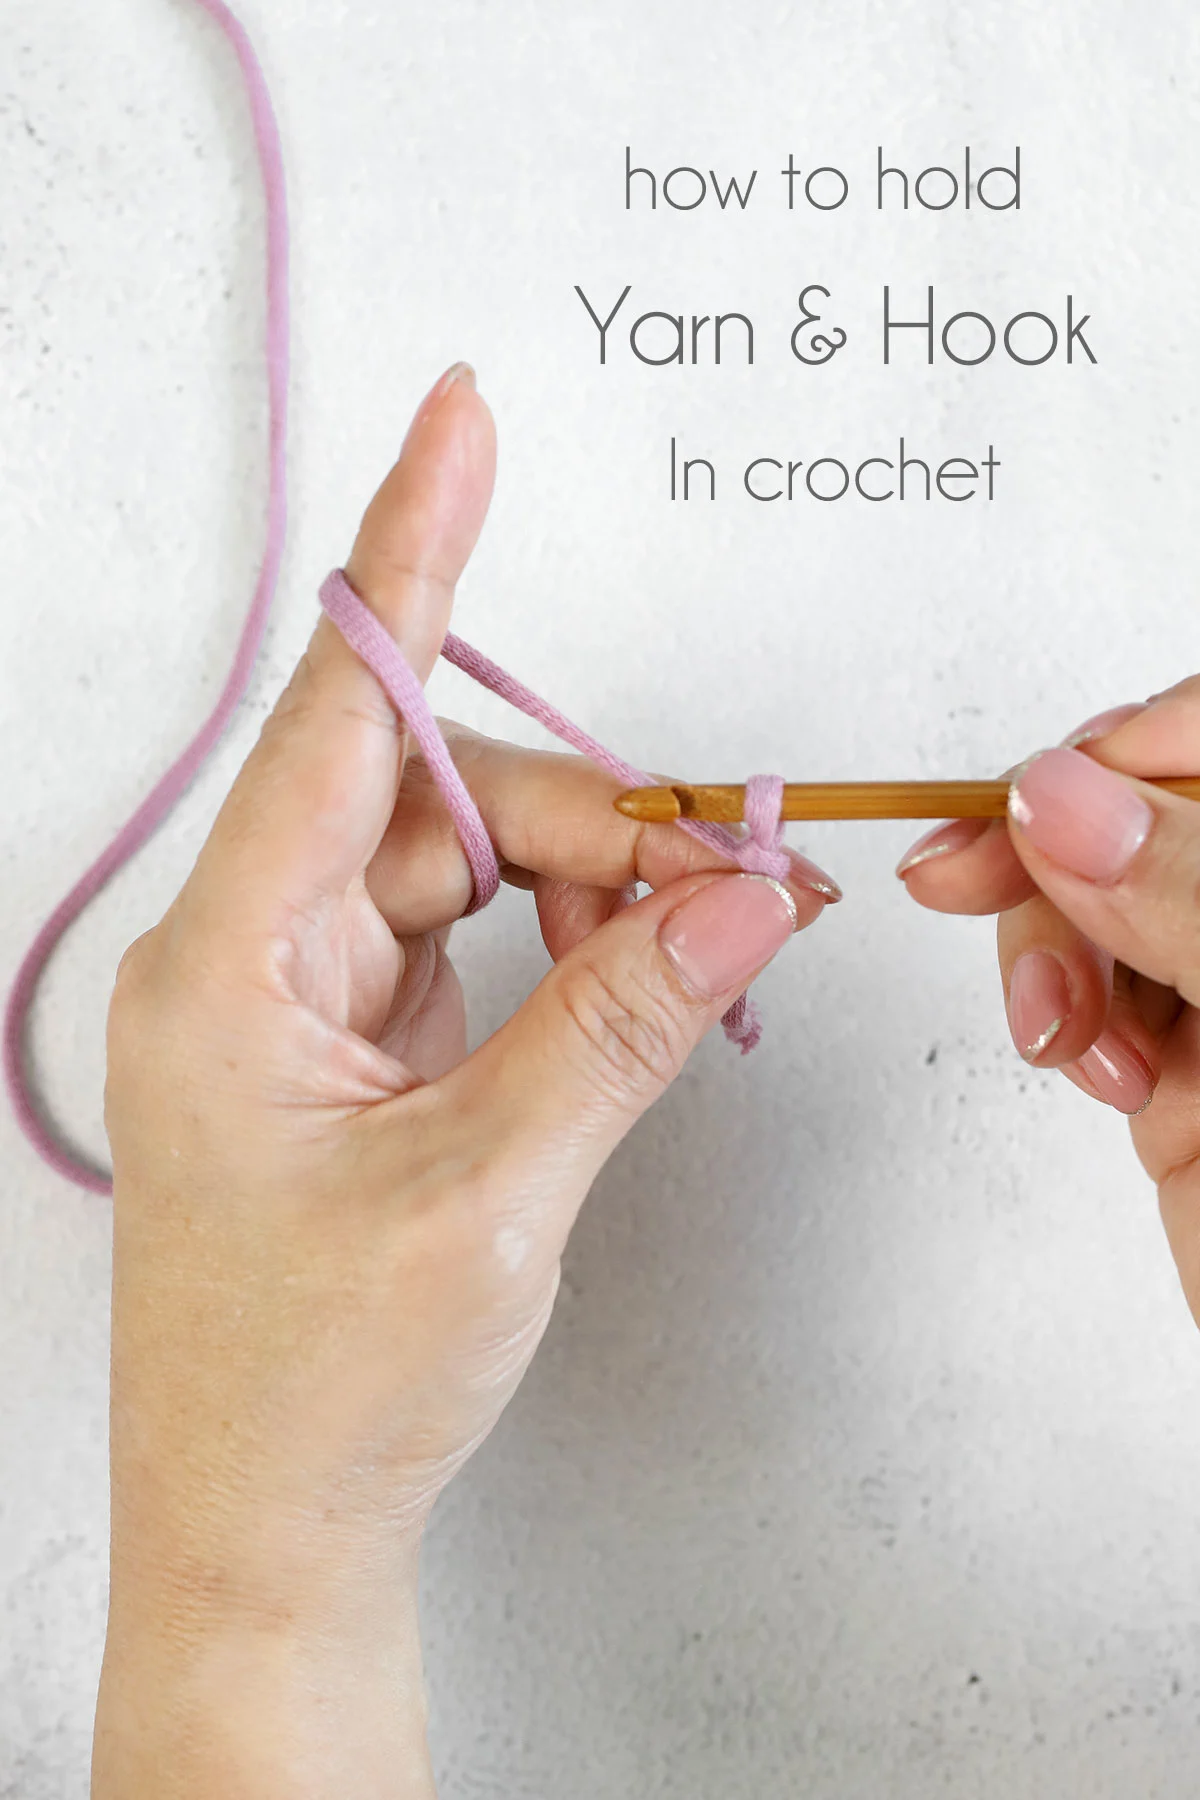 Top 5 Crochet Hooks – Relaxing With Yarn